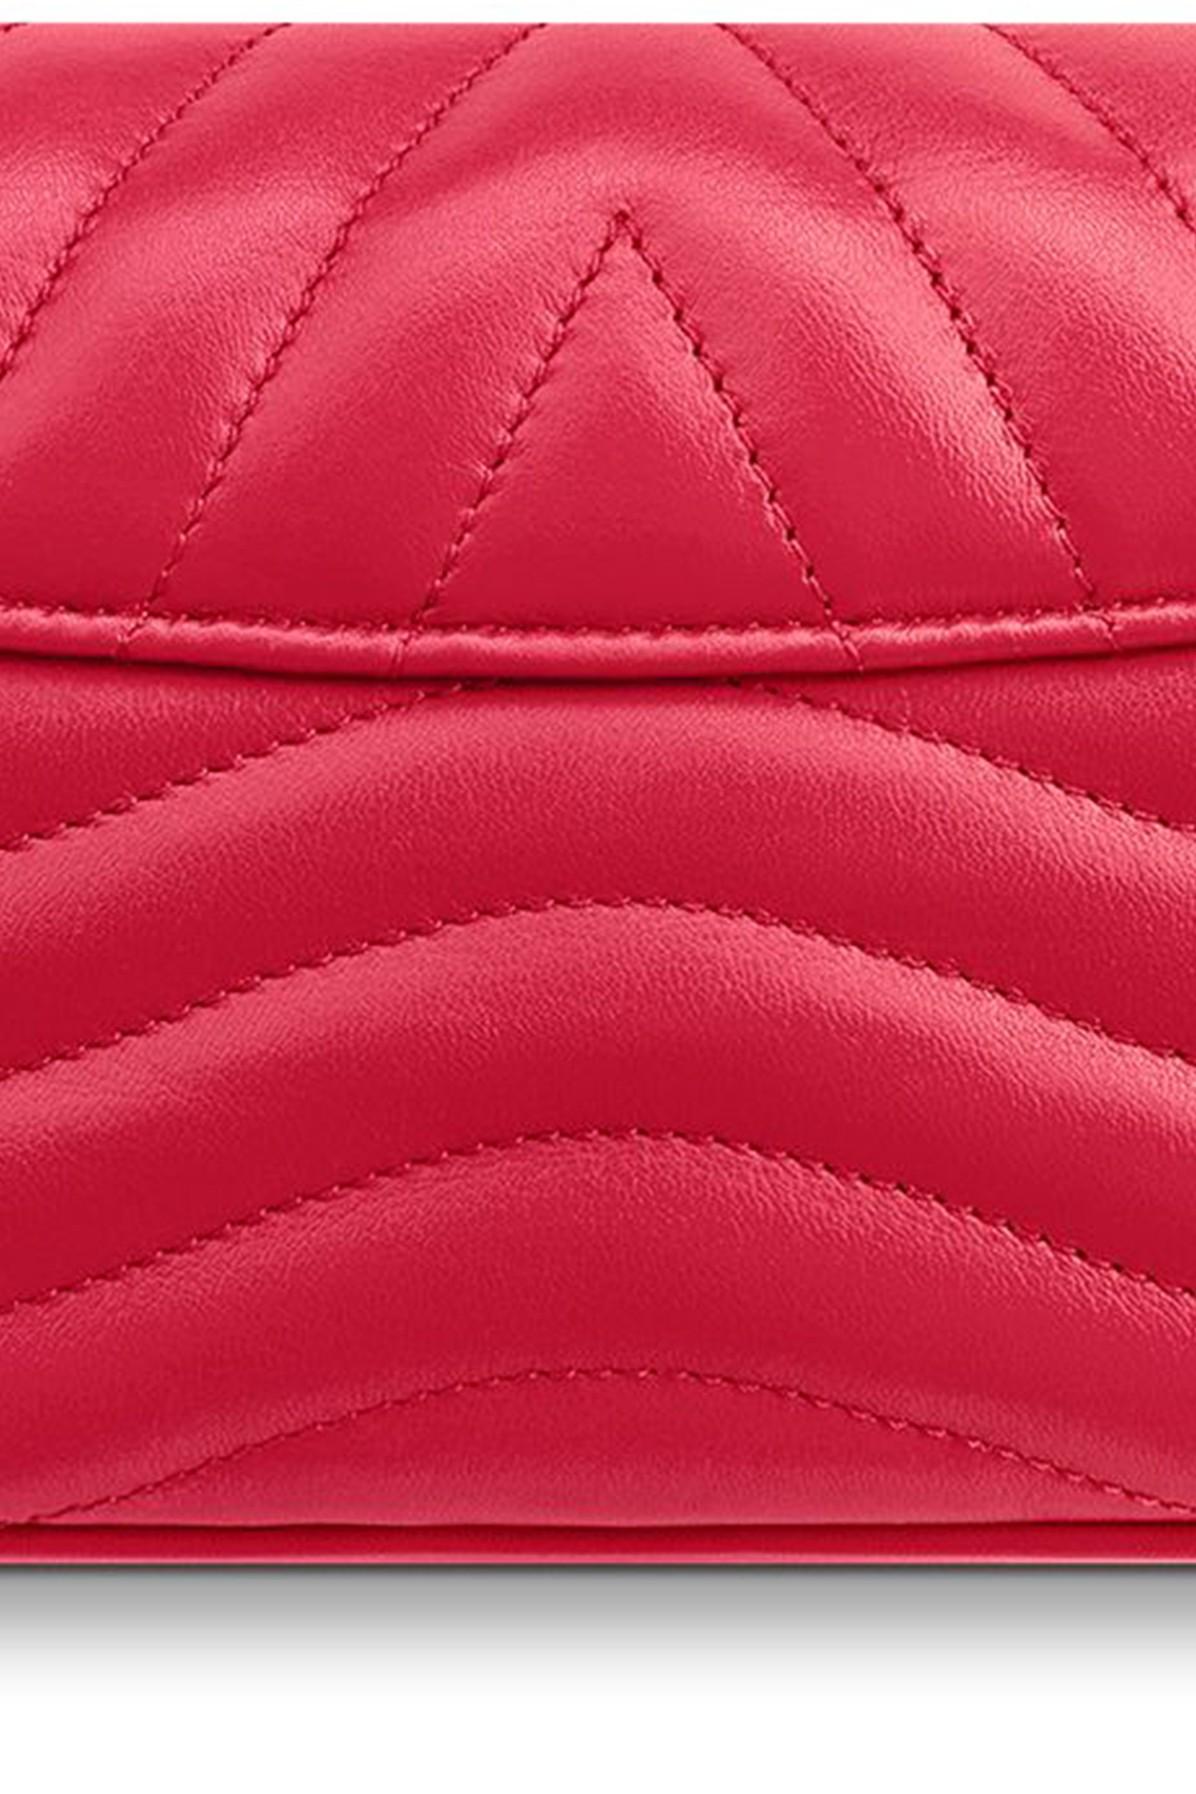 Louis Vuitton New Wave Chain Pochette Wallet Bag - Farfetch